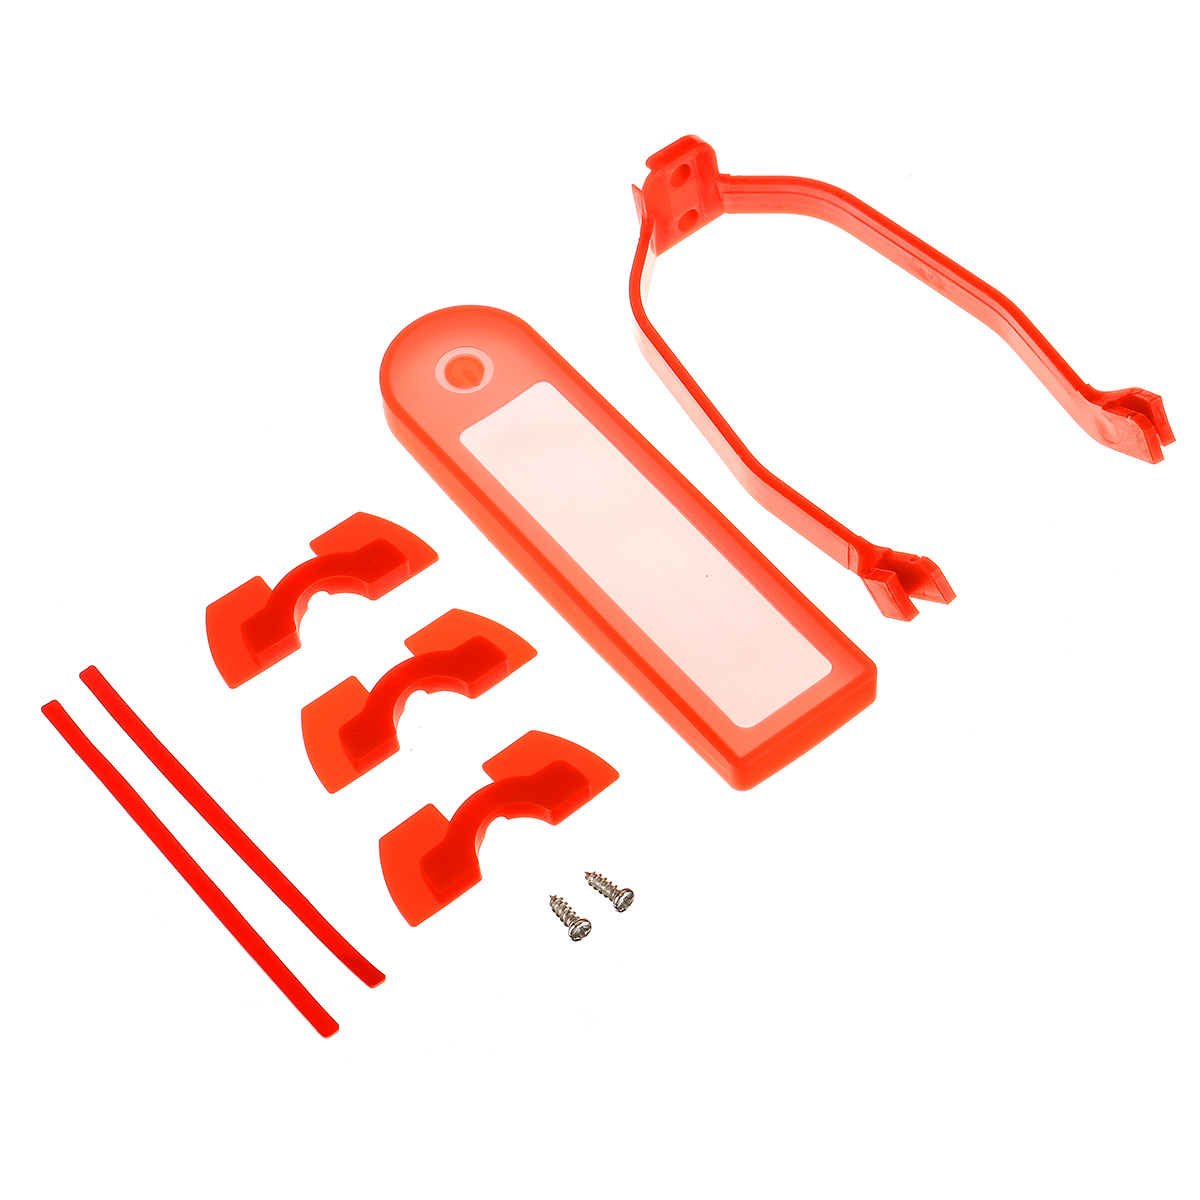 3D Printing Scooter Rear Fender Support Bracket Starter Kit For Xiaomi M365